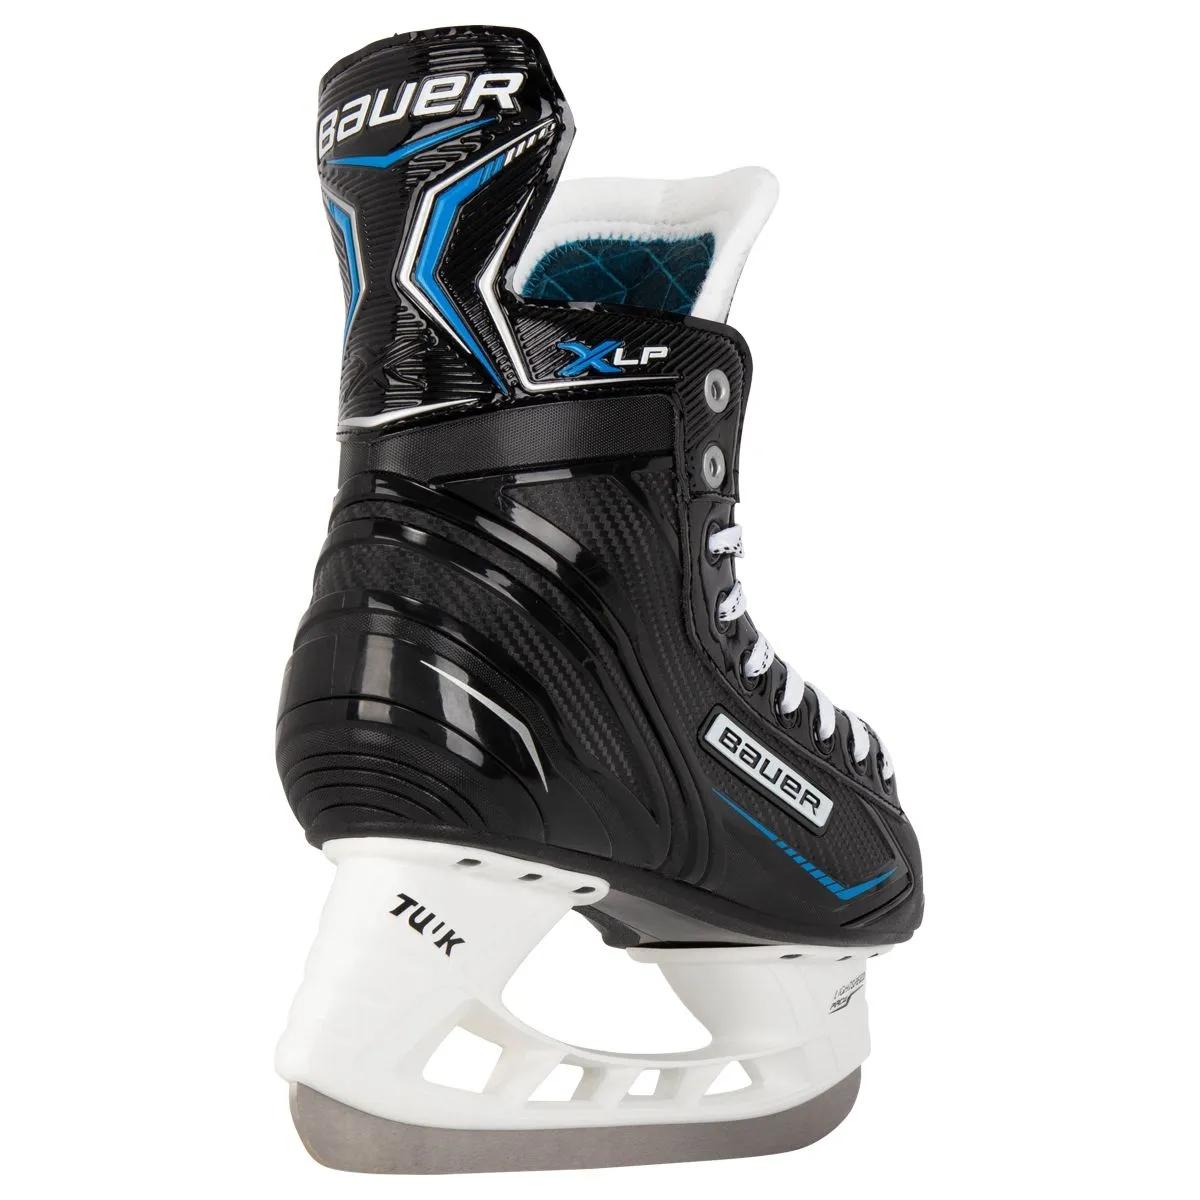 Bauer X-LP Int. Hockey Skatesproduct zoom image #4